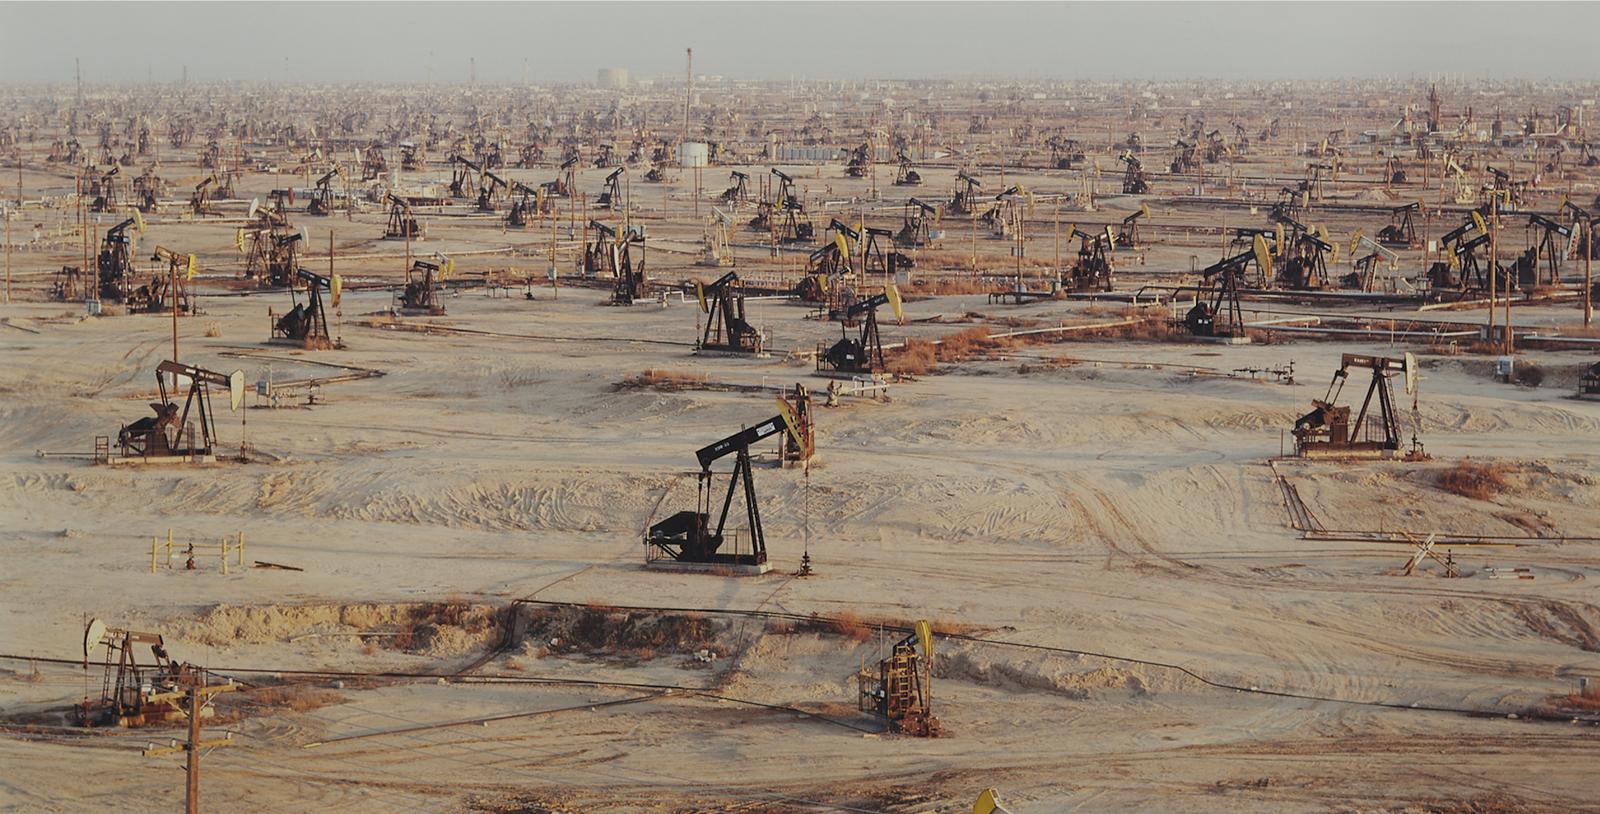 Edward Burtynsky (1955) - Oil Fields #1, Belridge, California, 2002